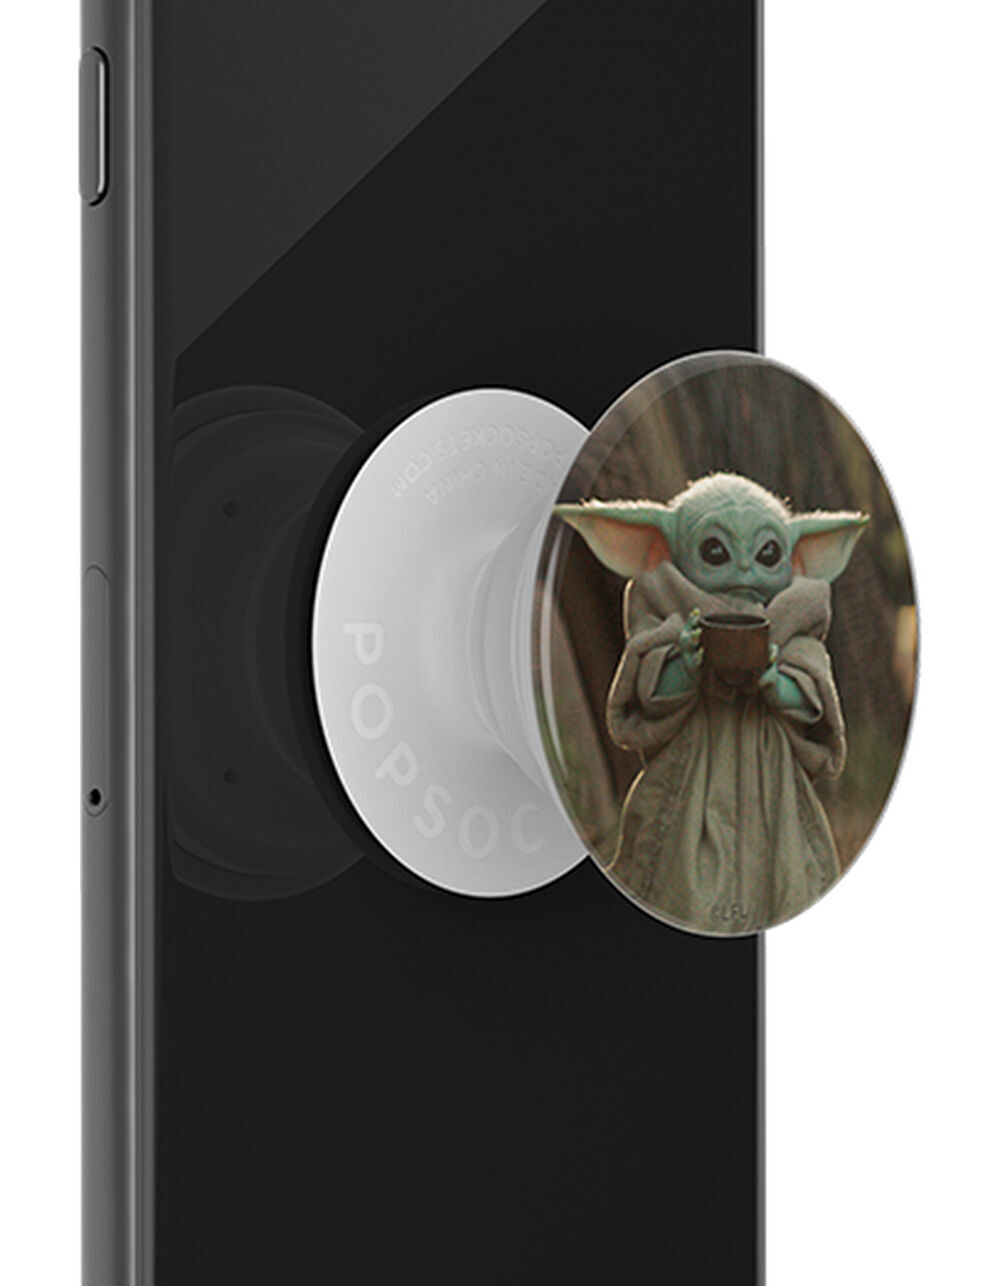 Baby Yoda phone grip